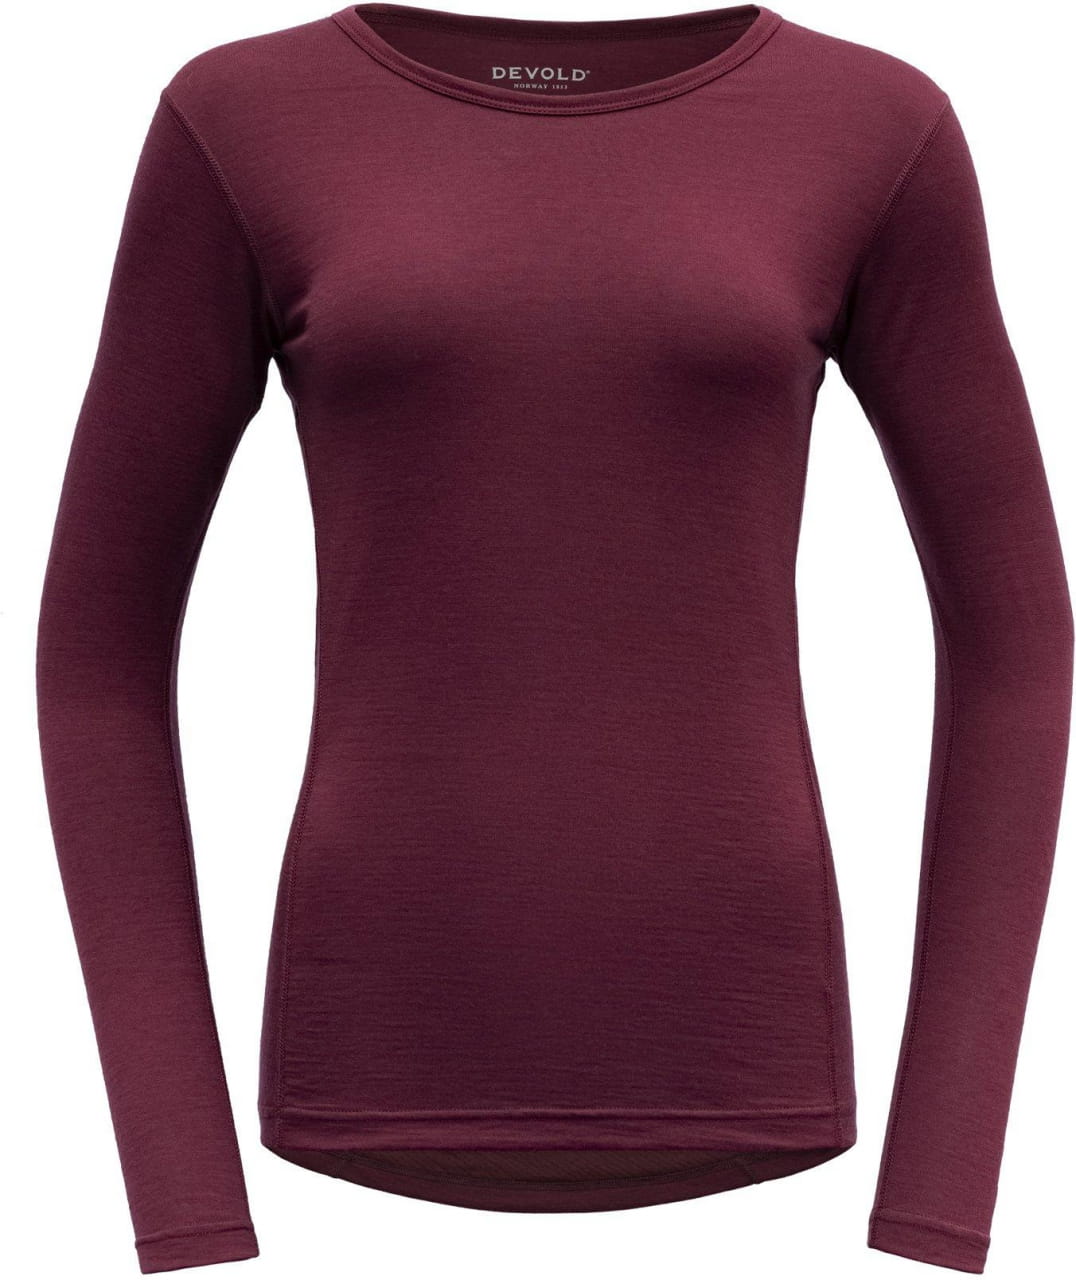 Devold dámské vlněné triko Breeze Woman Shirt Barva: beetroot, Velikost: XL